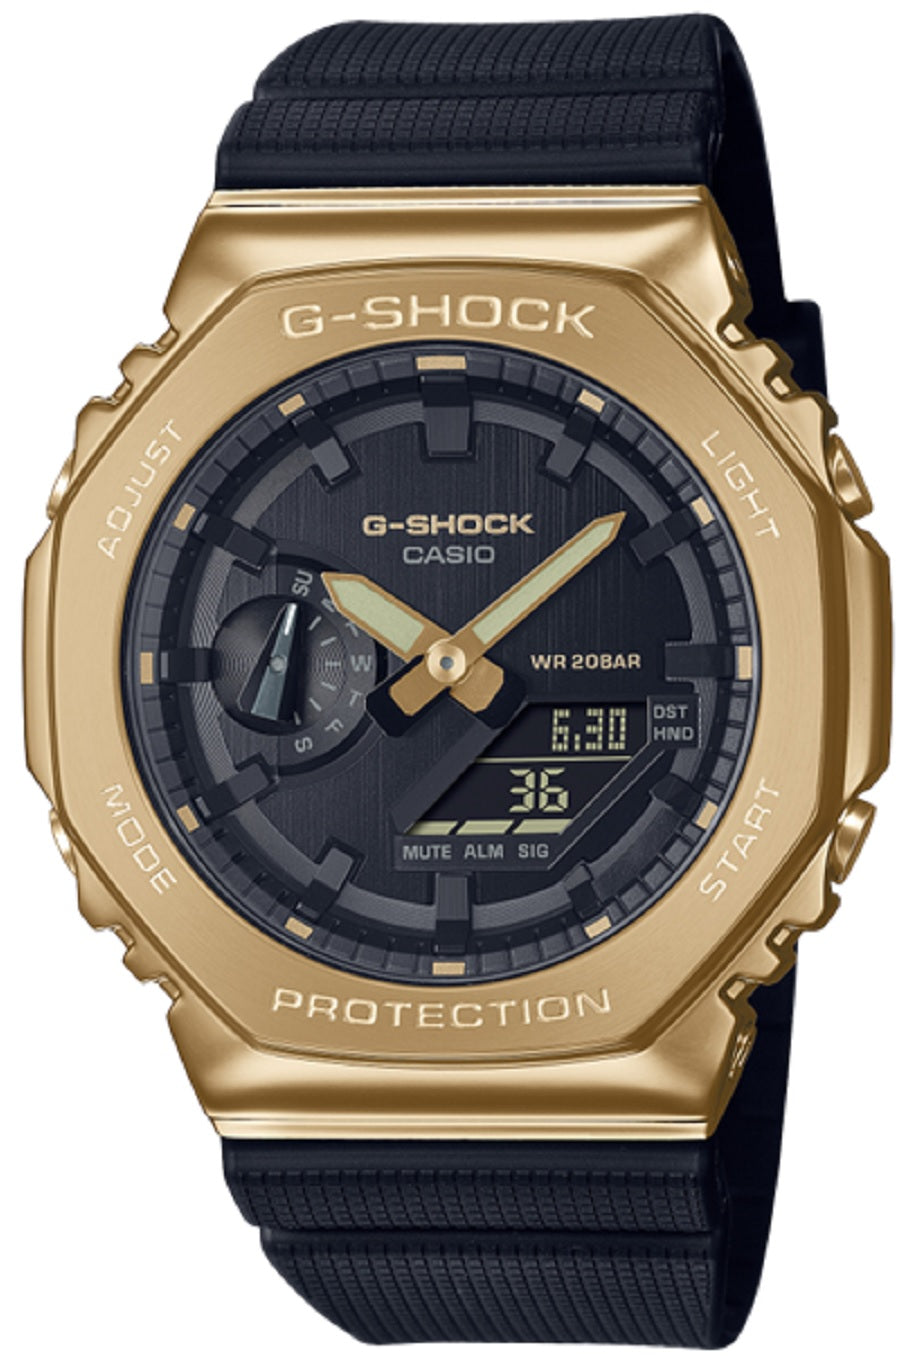 Casio G-shock GM-2100G-1A9 Digital Analog Rubber Strap Watch-Watch Portal Philippines